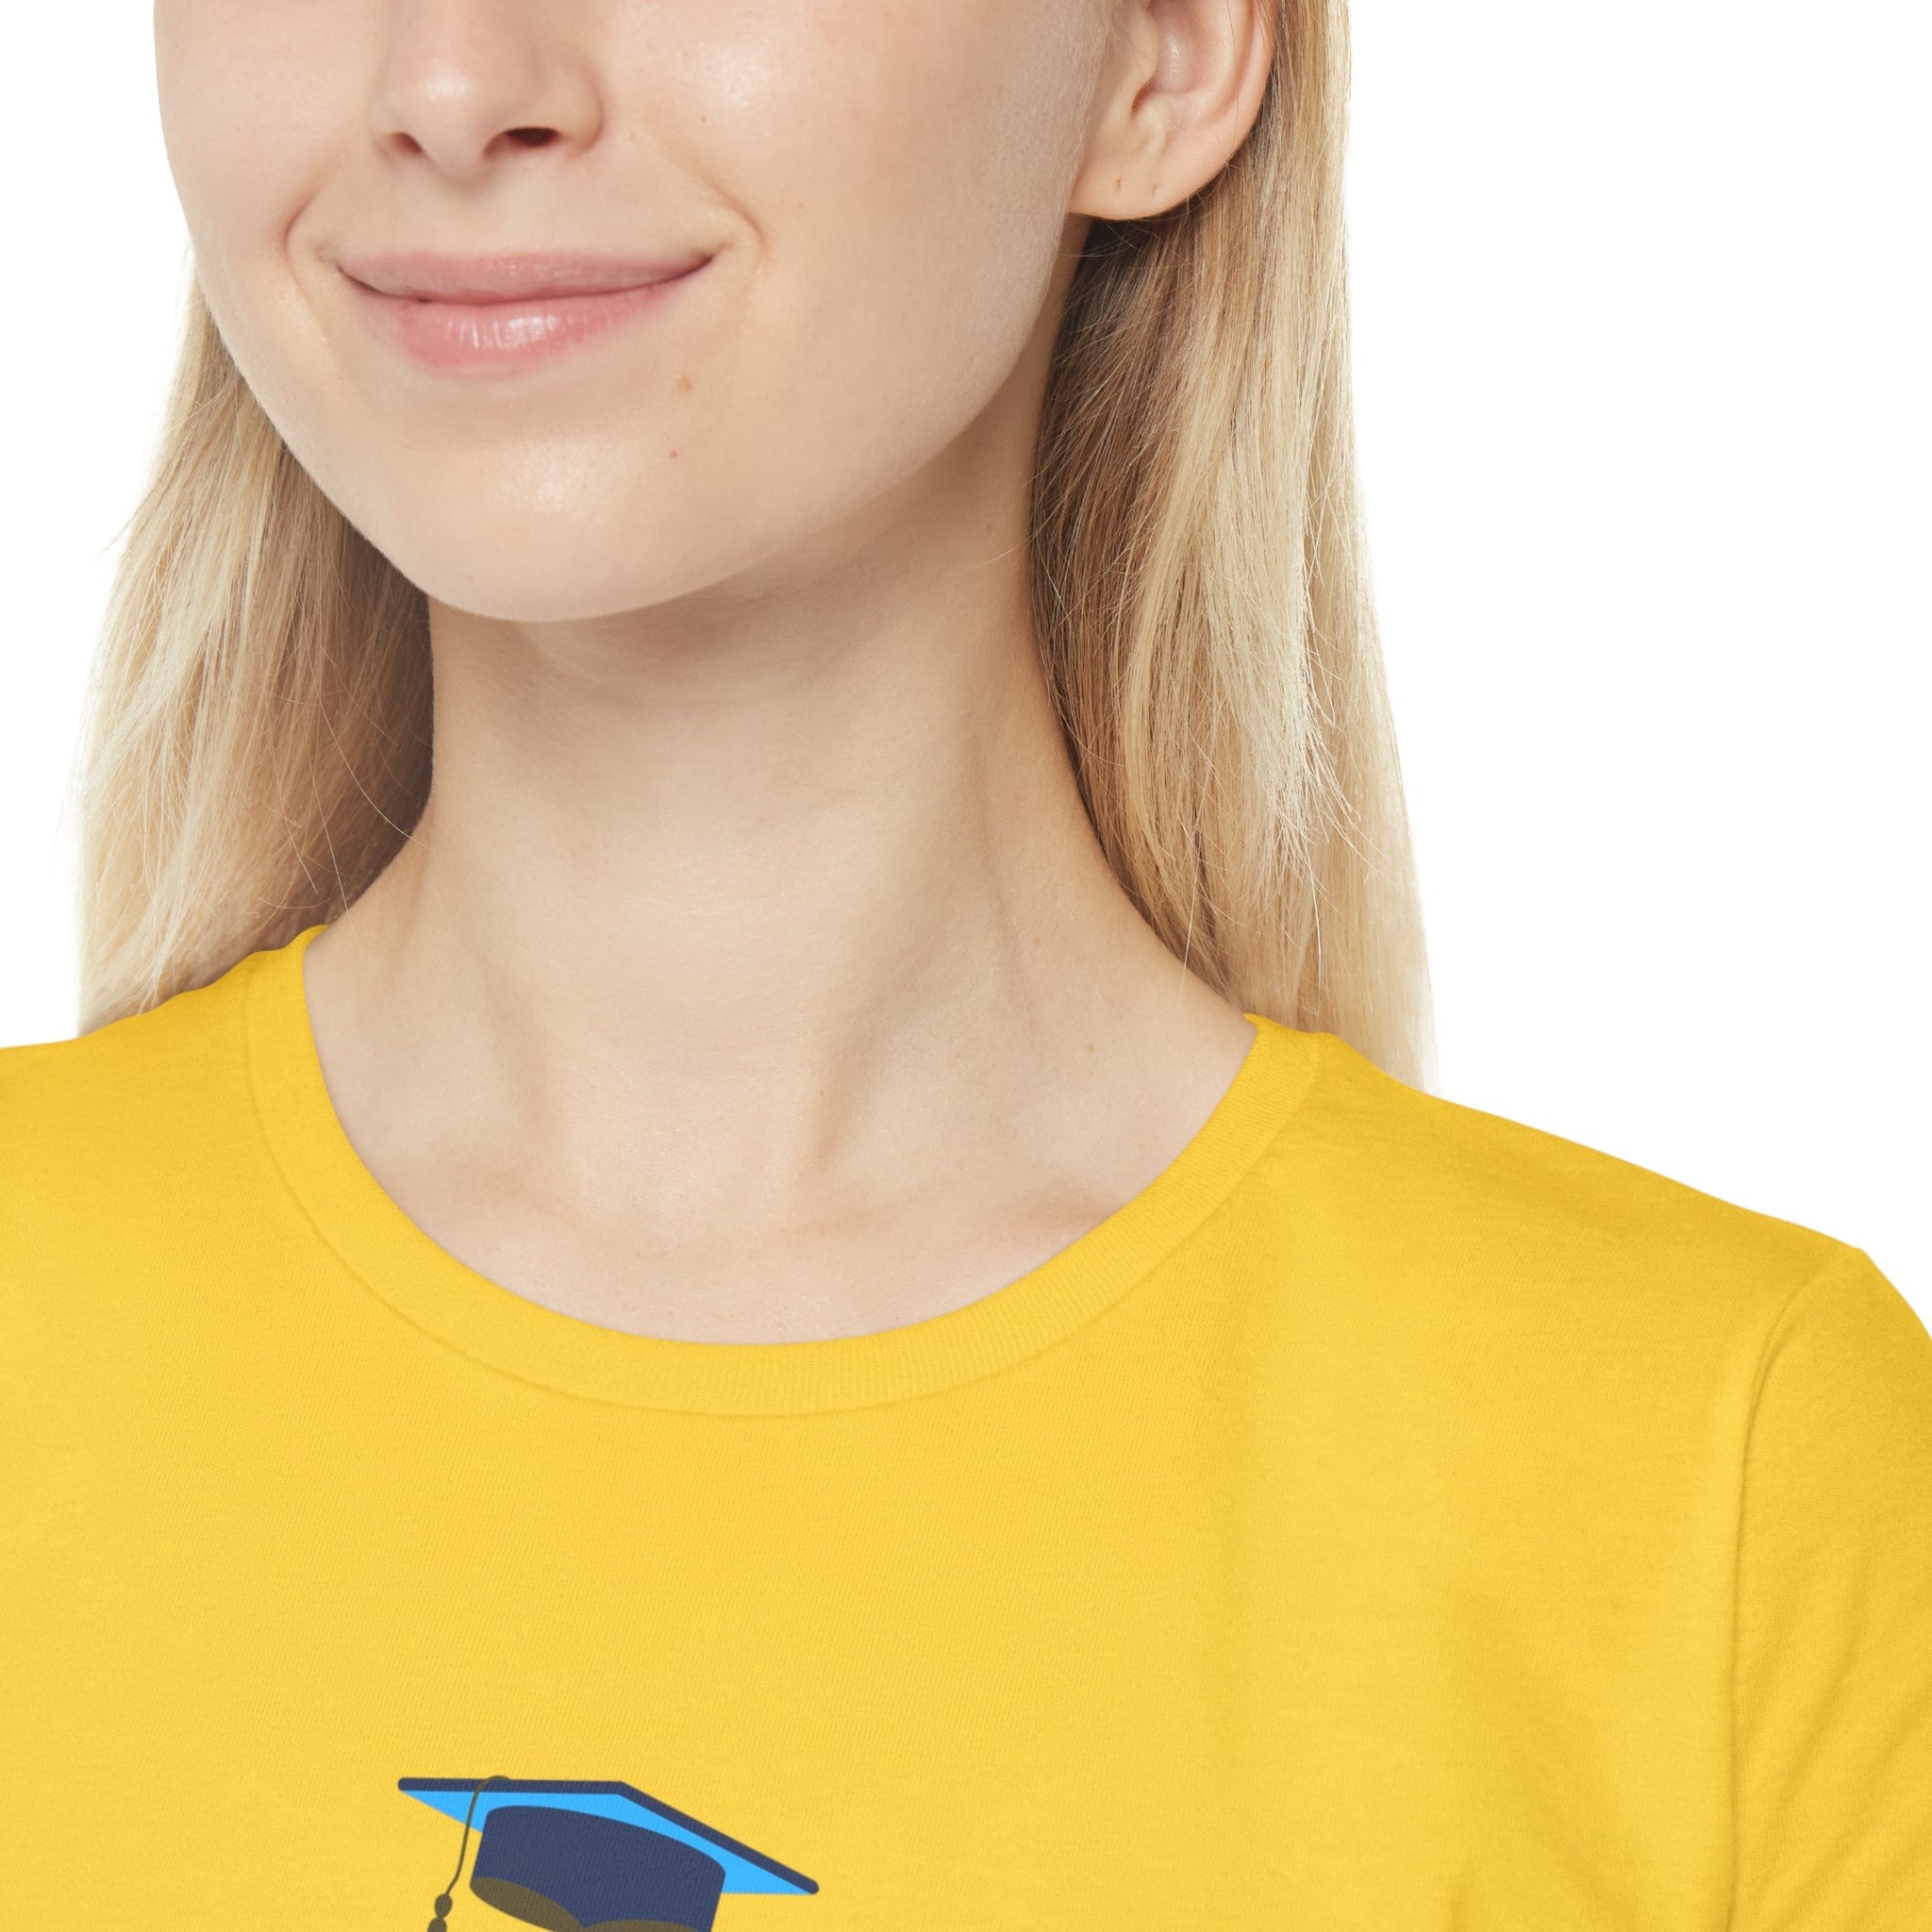 Printify T-Shirt Class of 2023 Mission Accomplished! - Women's Iconic T-Shirt